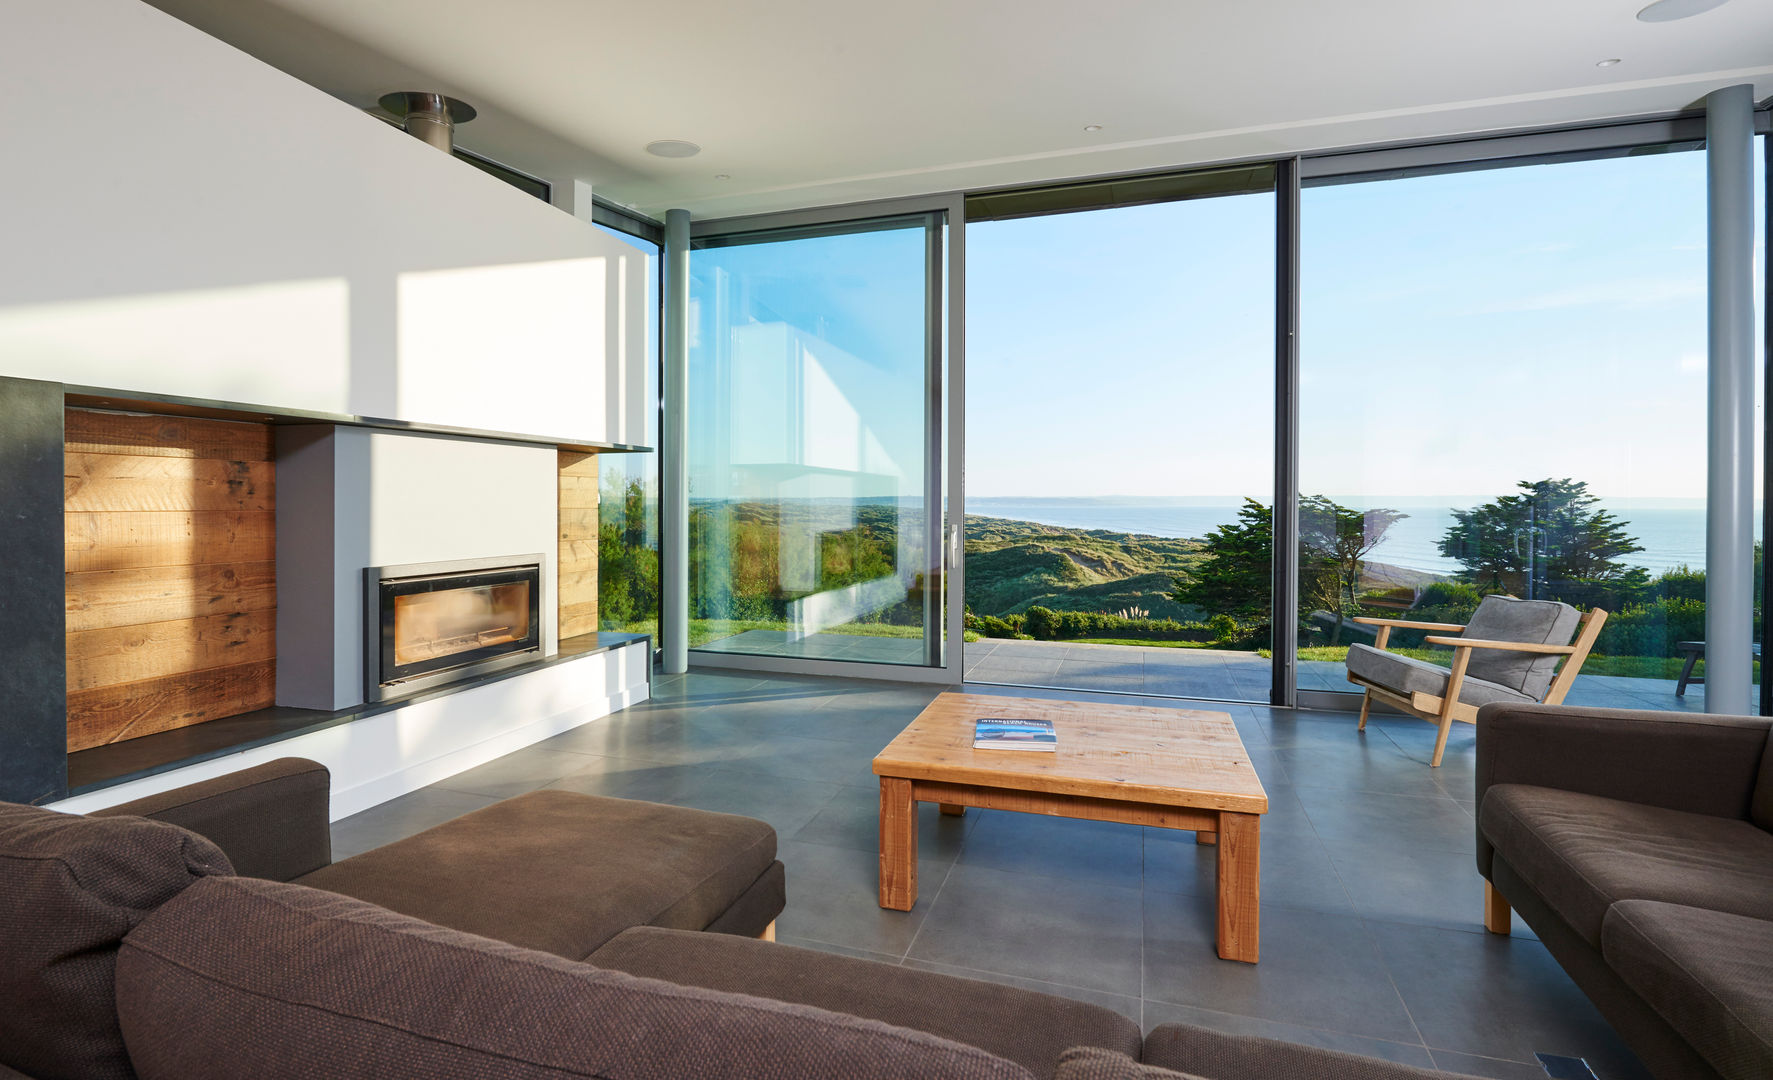 Sandhills Open Plan Living Room with Stunning Views Barc Architects 모던스타일 거실